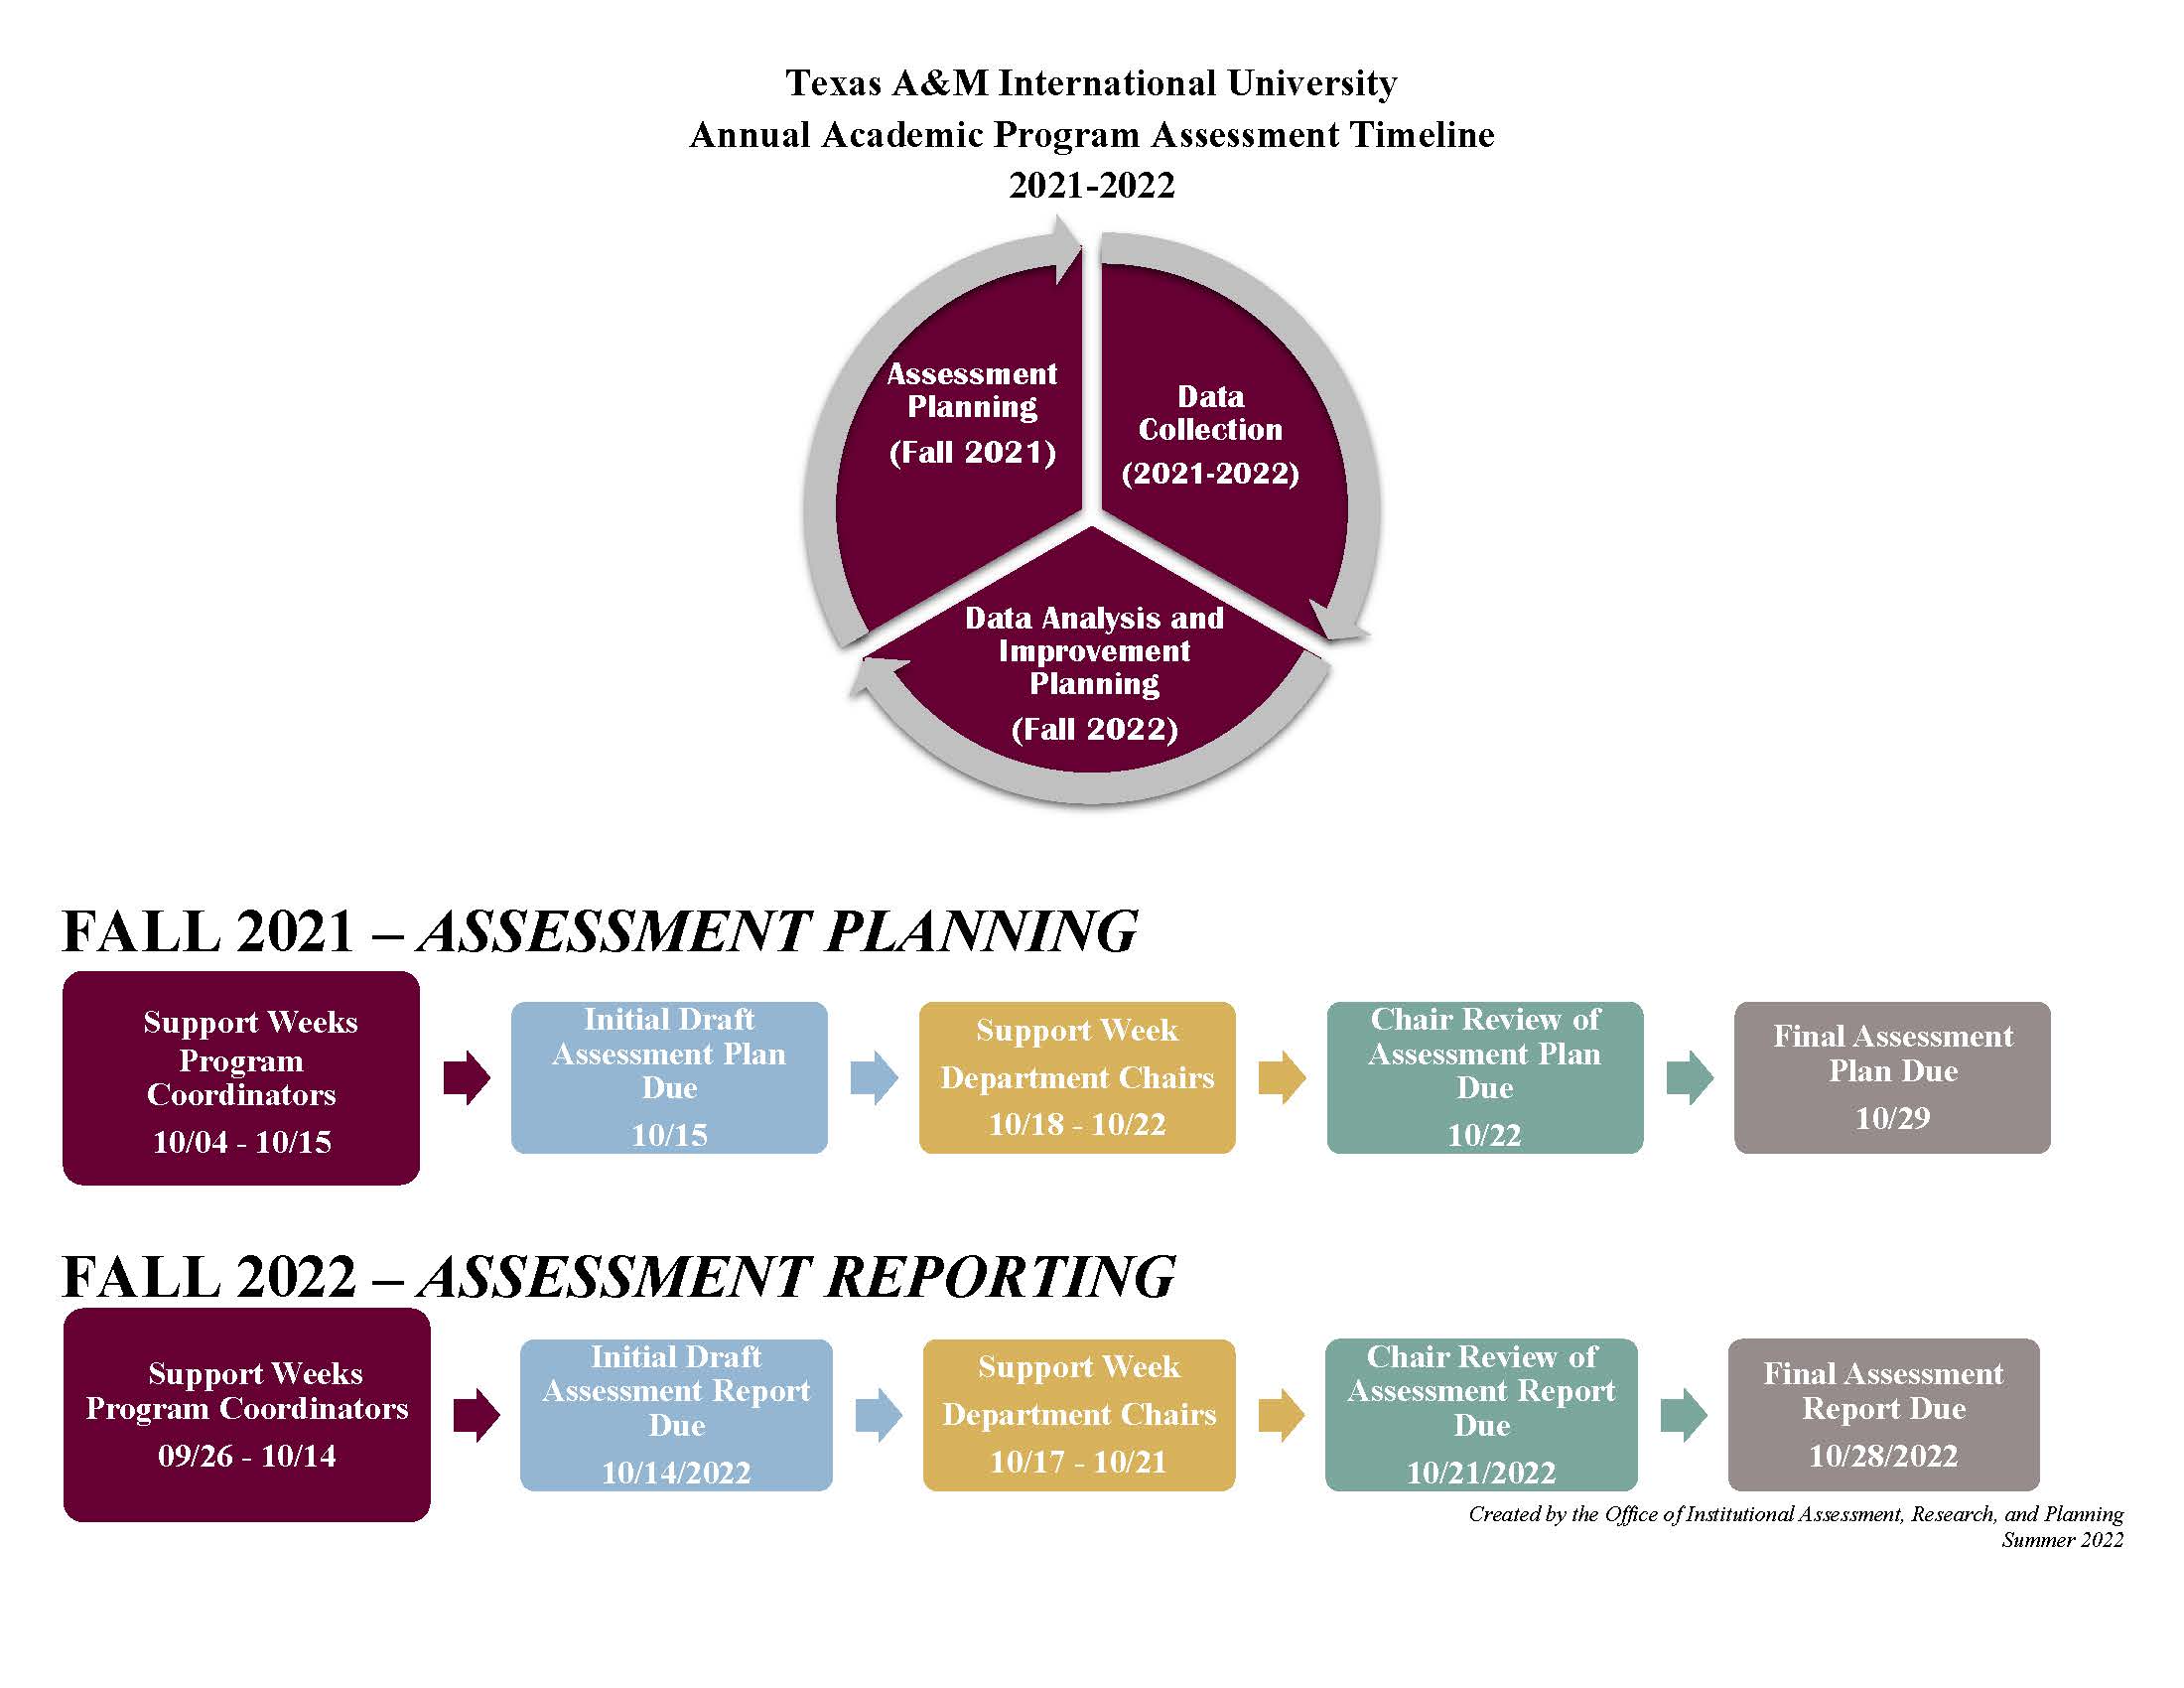 Updated 2021-2022 Assessment Timeline